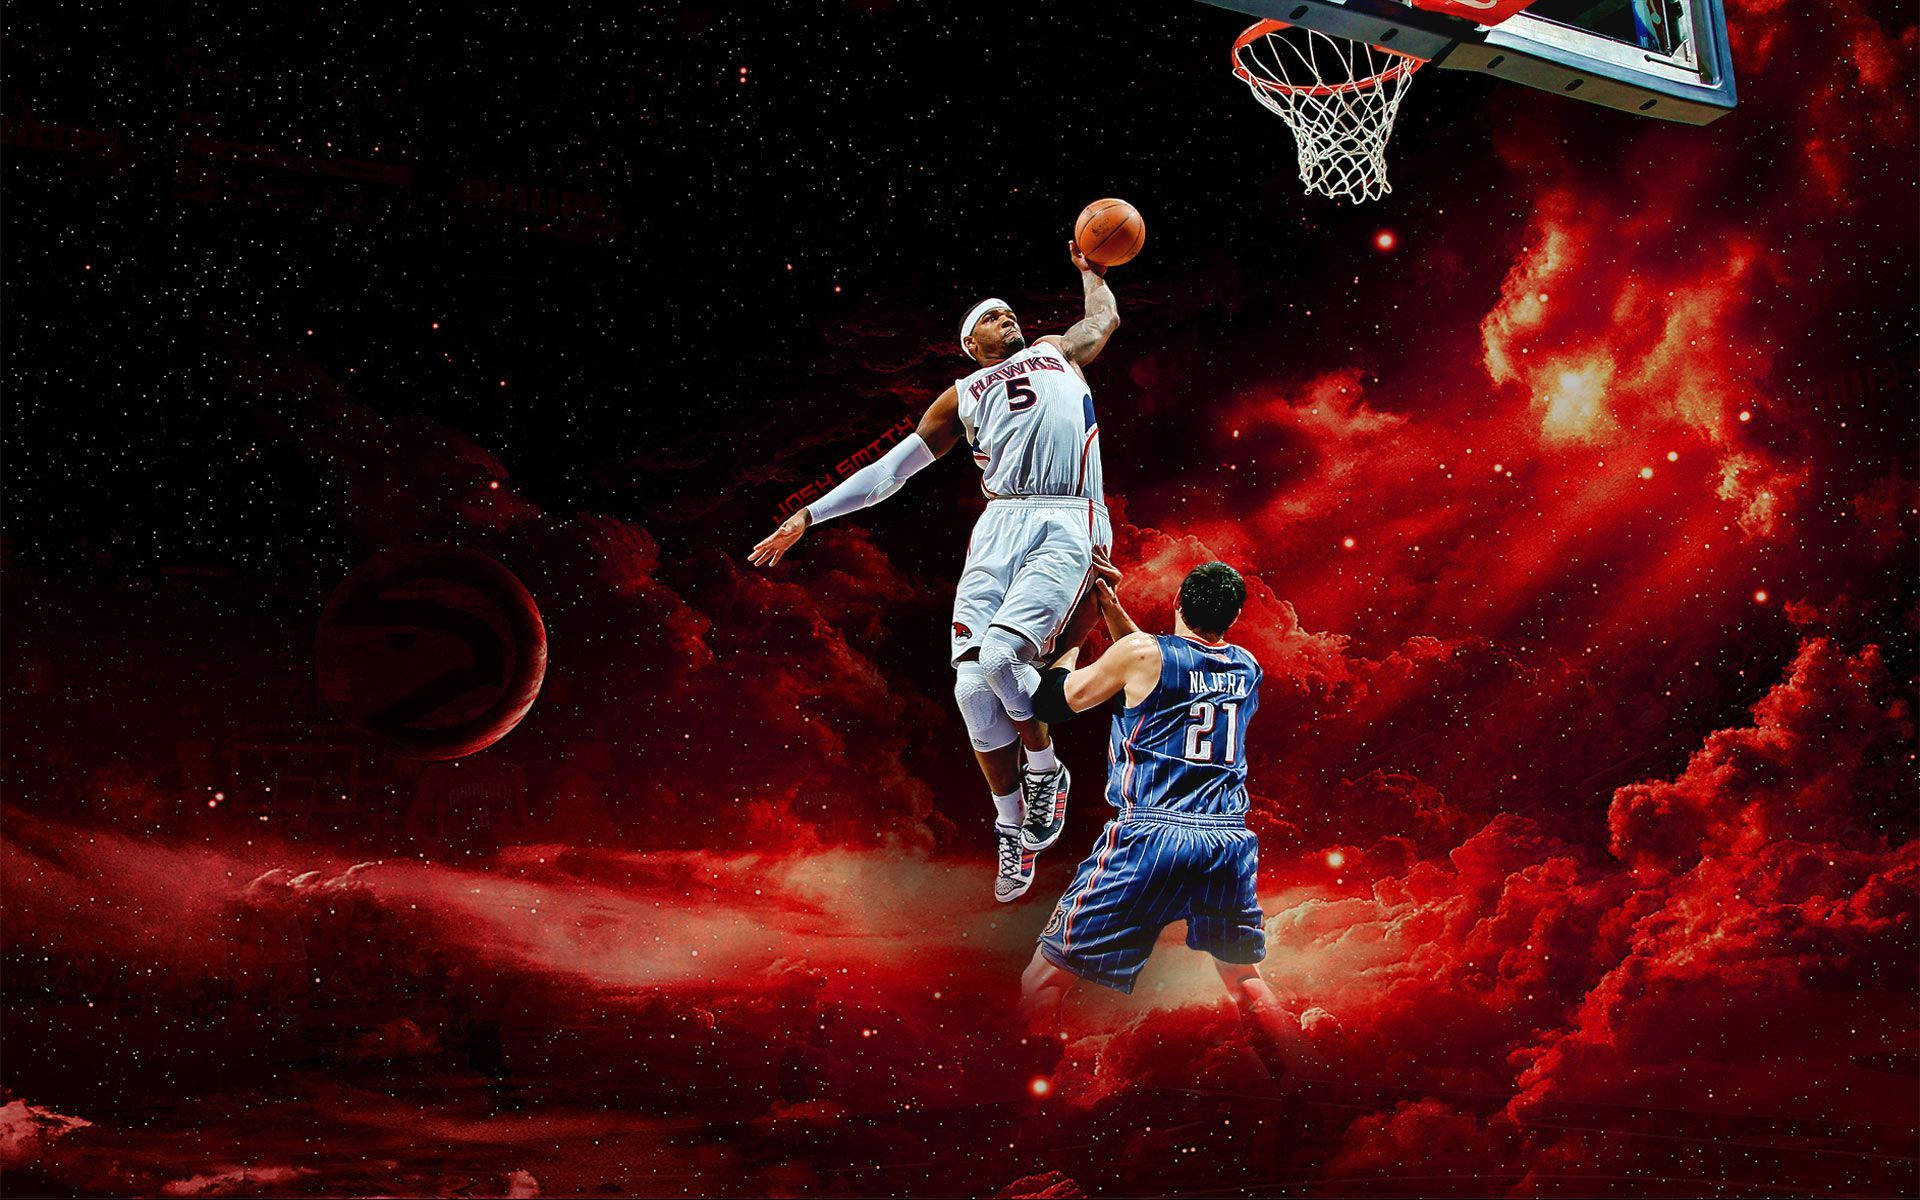 Jordan Basketball Wallpapers  Top Free Jordan Basketball Backgrounds   WallpaperAccess